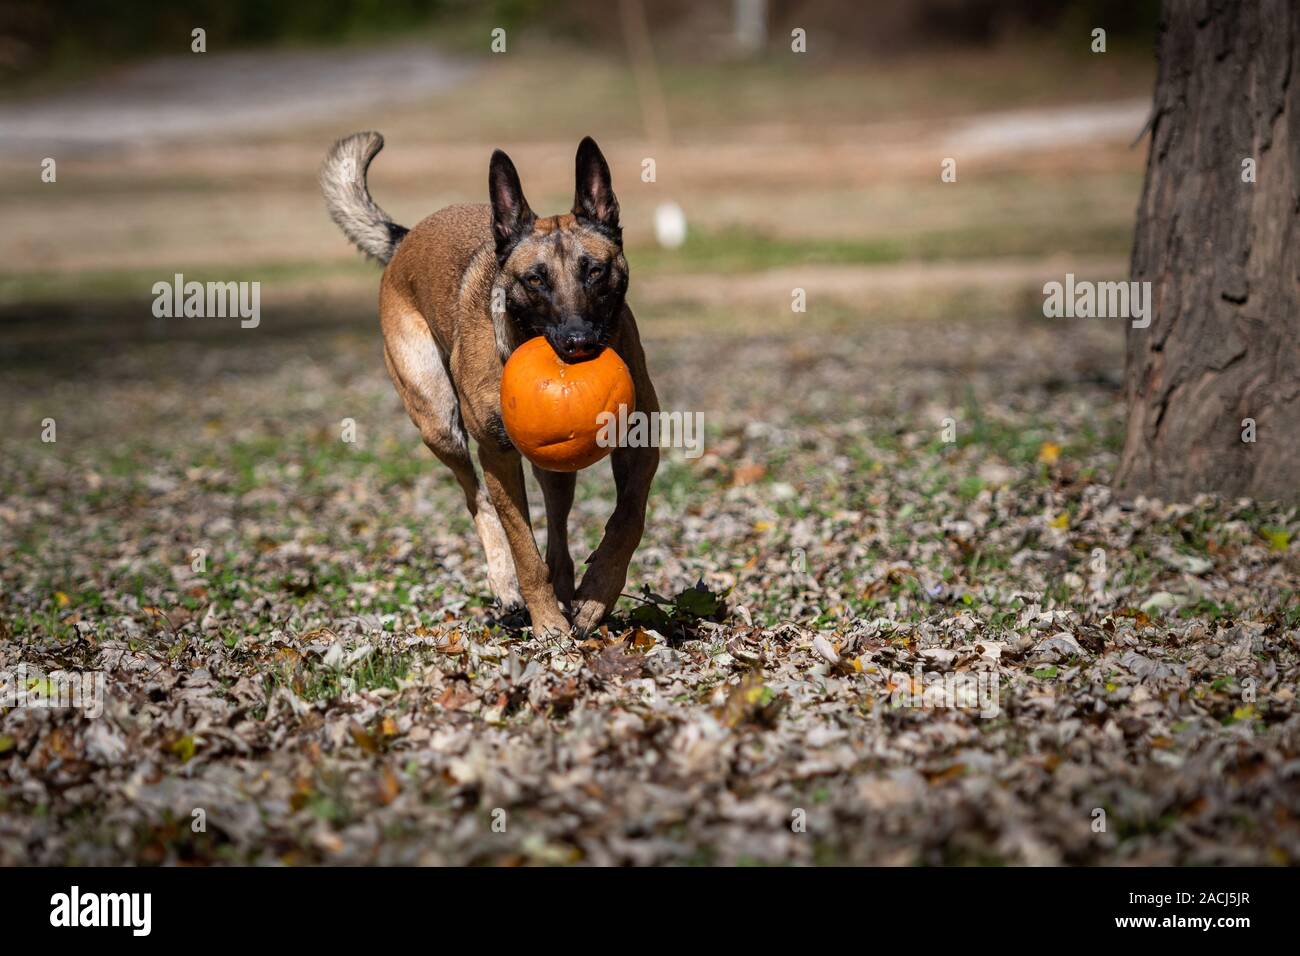 Belgian Malinois dog carrying a pumpkin Stock Photo